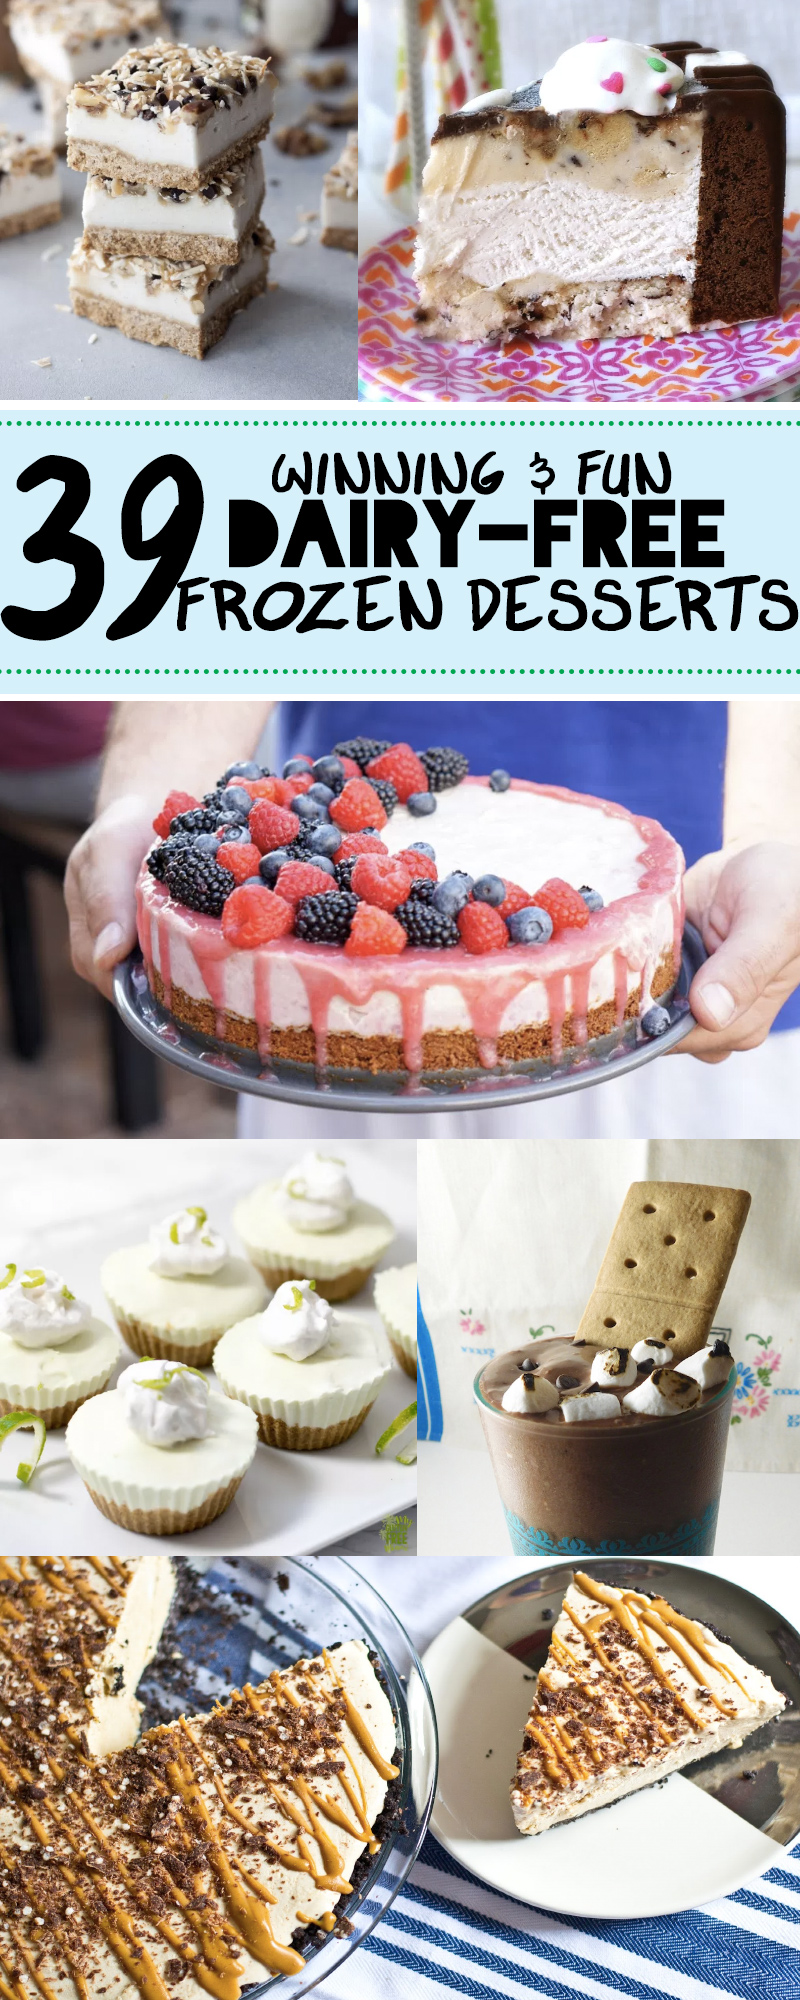 39 Winning Dairy-Free Frozen Dessert Recipes for #FrozenFridays - tons of vegan, plant-based and gluten-free treats!